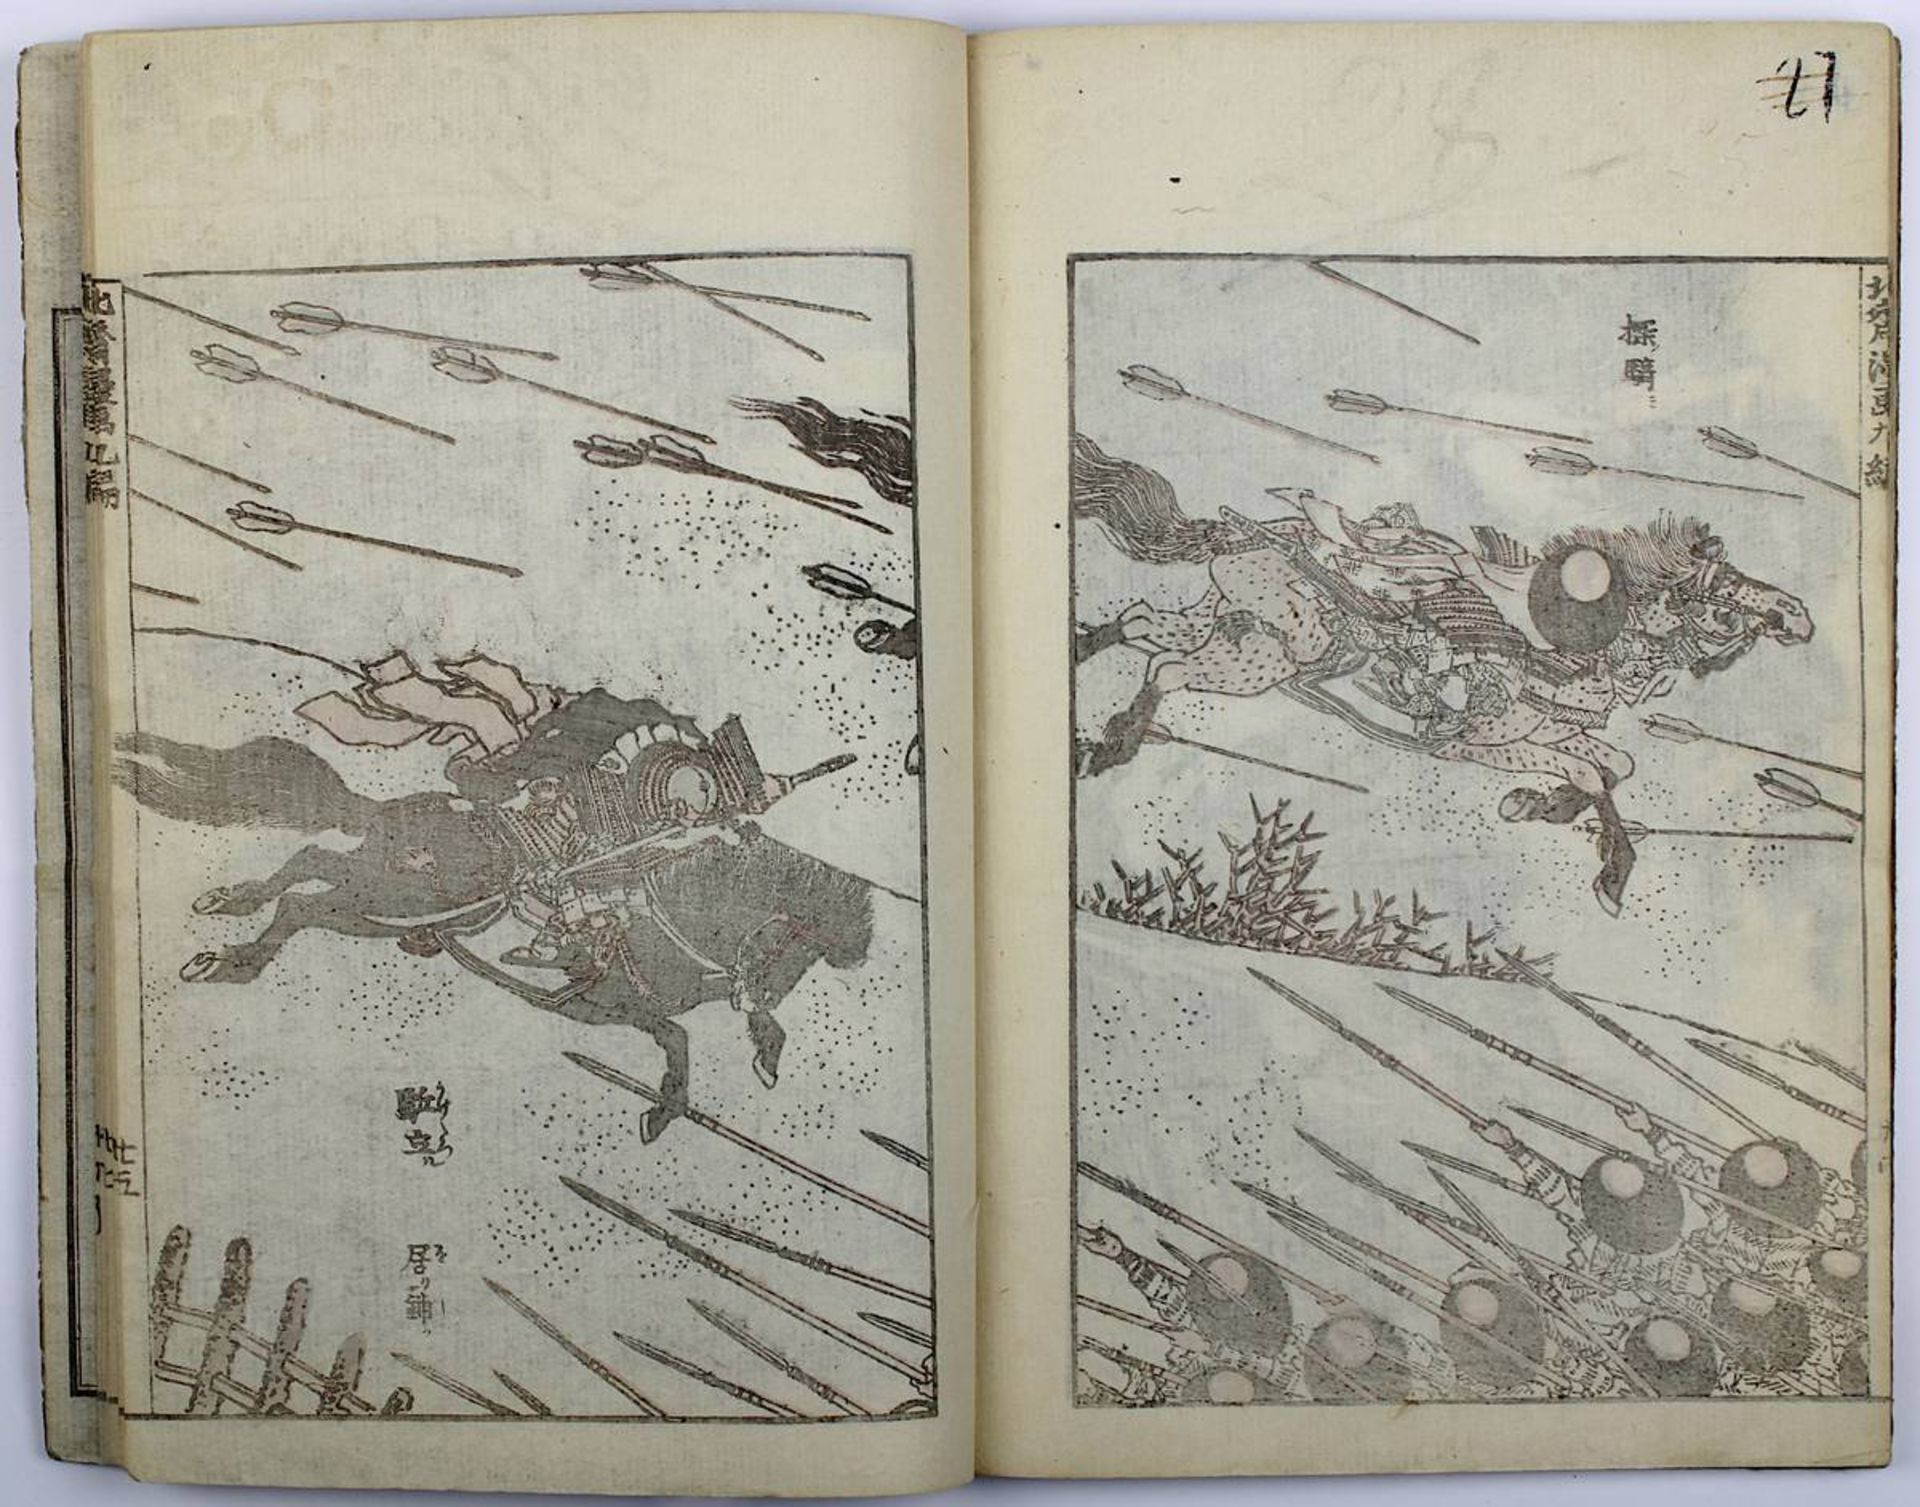 Katsushika Hokusai (1760-1849), Holzschnittbuch Hokusai Manga e-dehon Bd. 9, Japan 1879, Bd. 9 aus